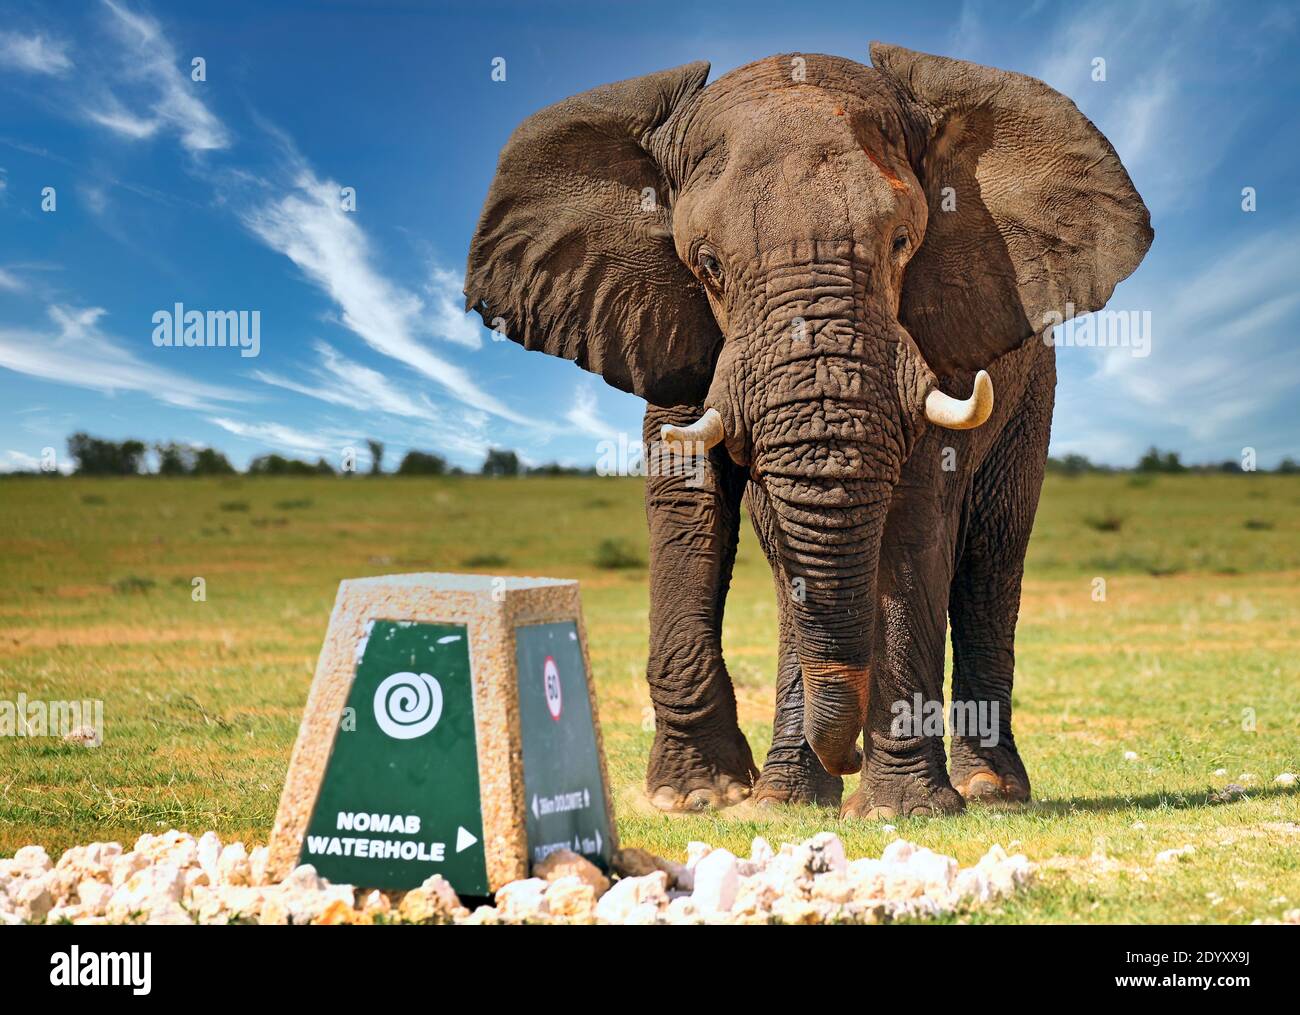 african elephant attacks sign, Loxodonta africana Stock Photo